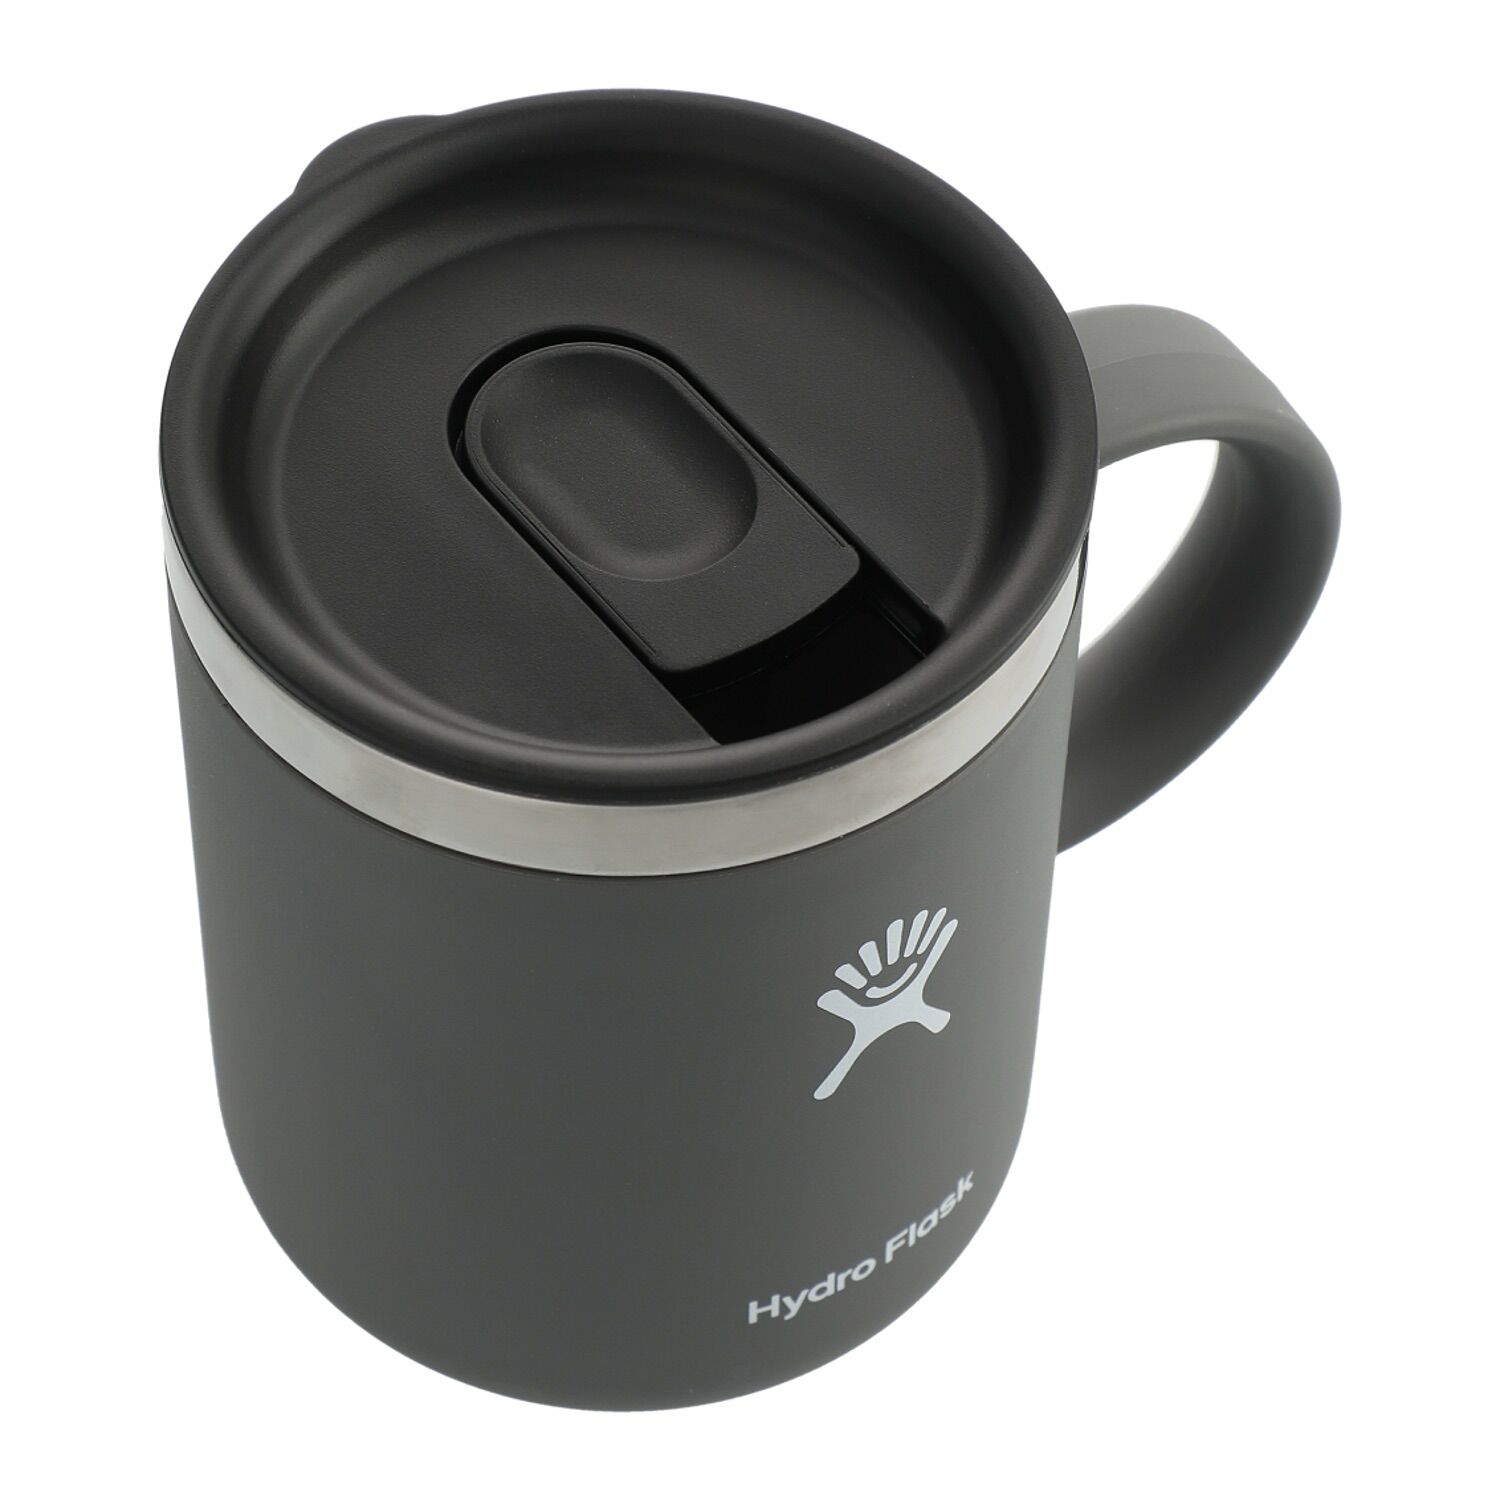 https://www.drivemerch.com/wp-content/uploads/2022/08/branded-hydro-flask-coffee-mug-12-oz-stone-lid.jpg